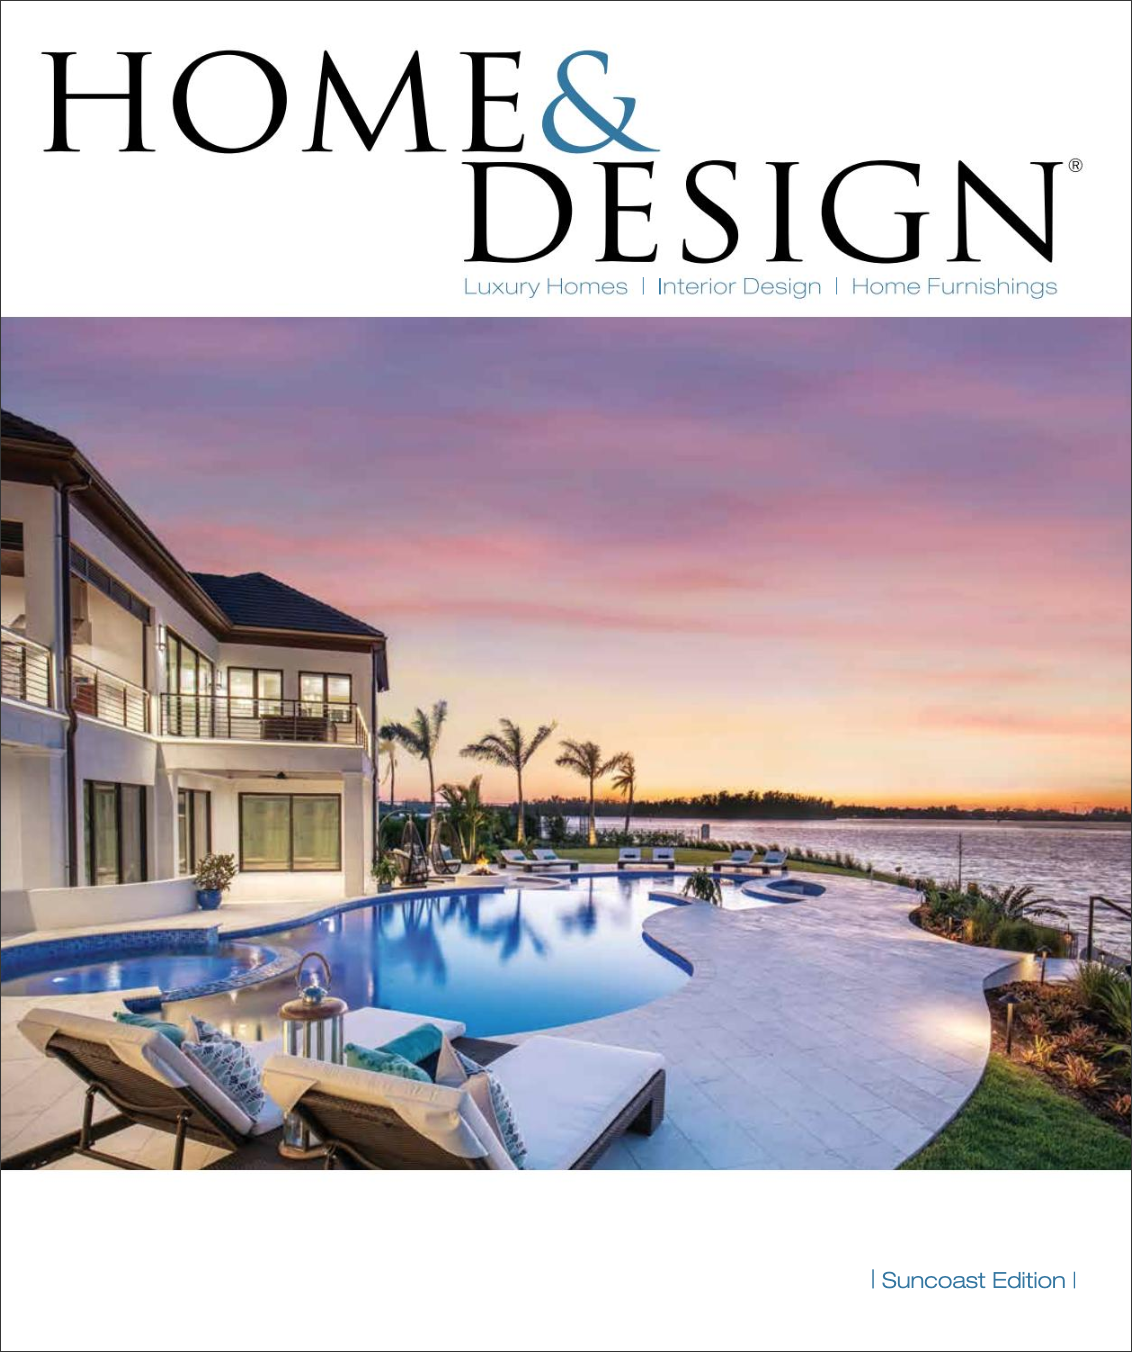 Home and Design Magazine Suncoast Edition International Granite and Stone